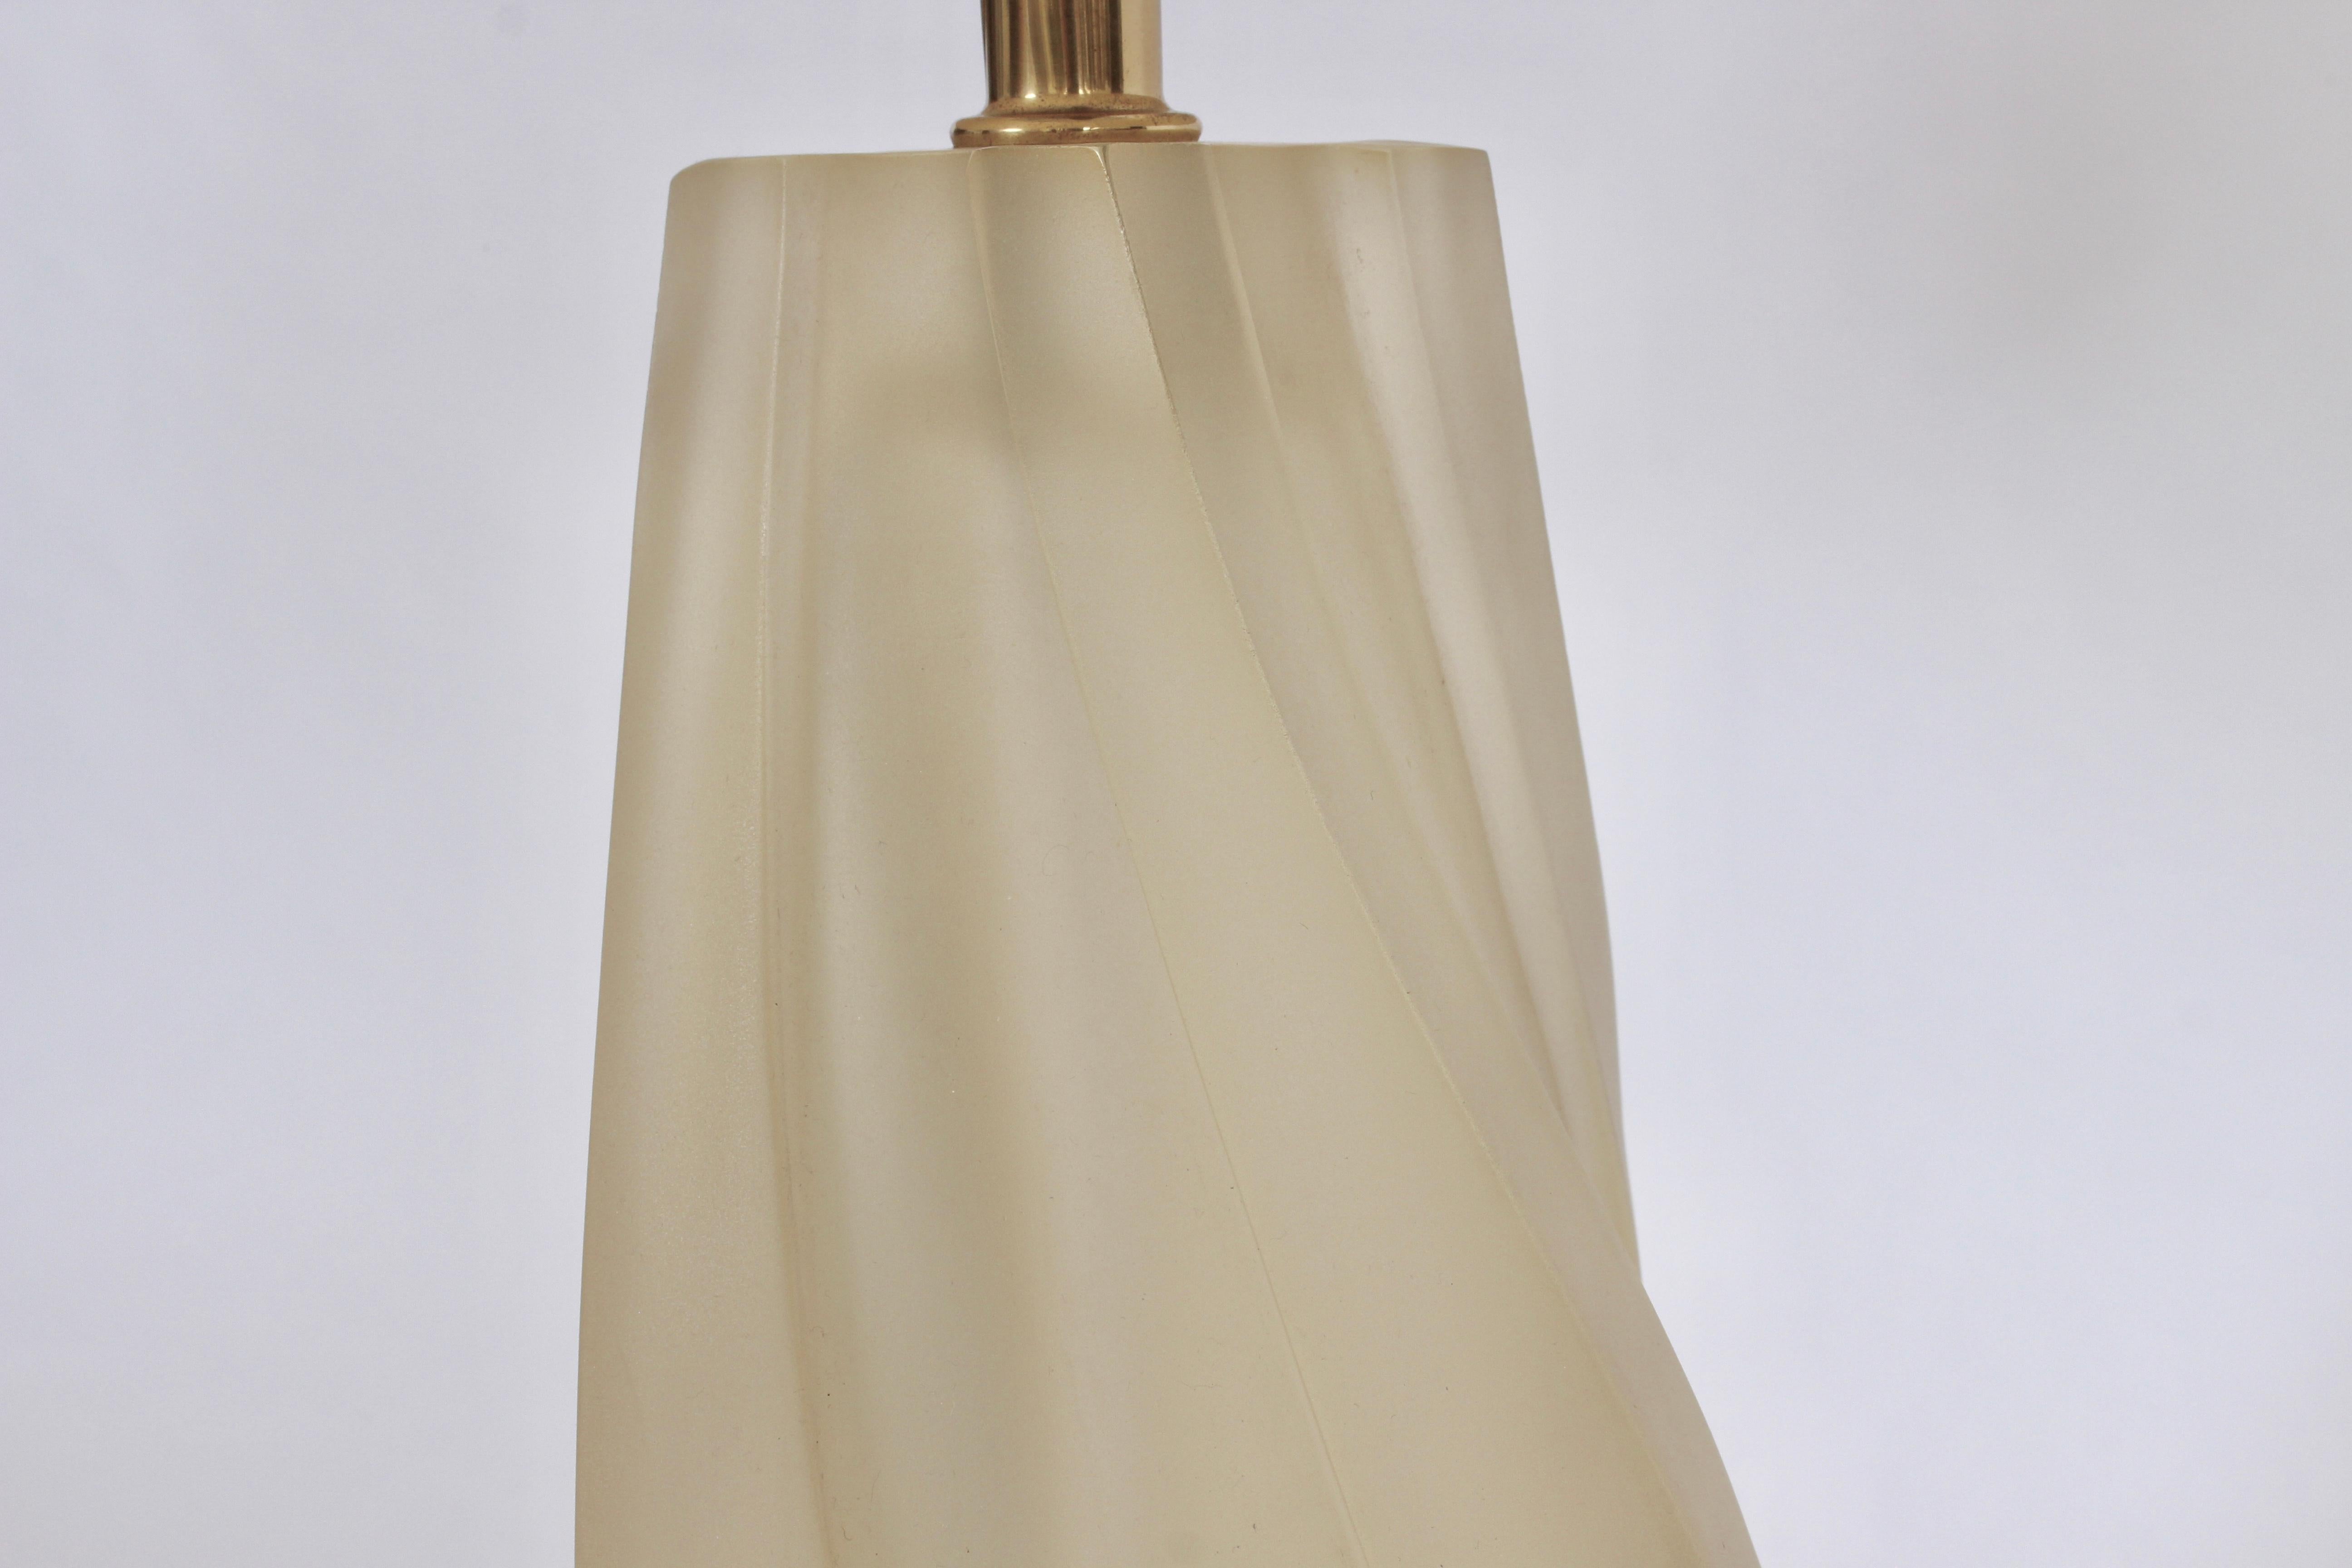 Italian Paolo Gucci Organic Modern Translucent Cream Cast Resin Table Lamp, 1970's For Sale